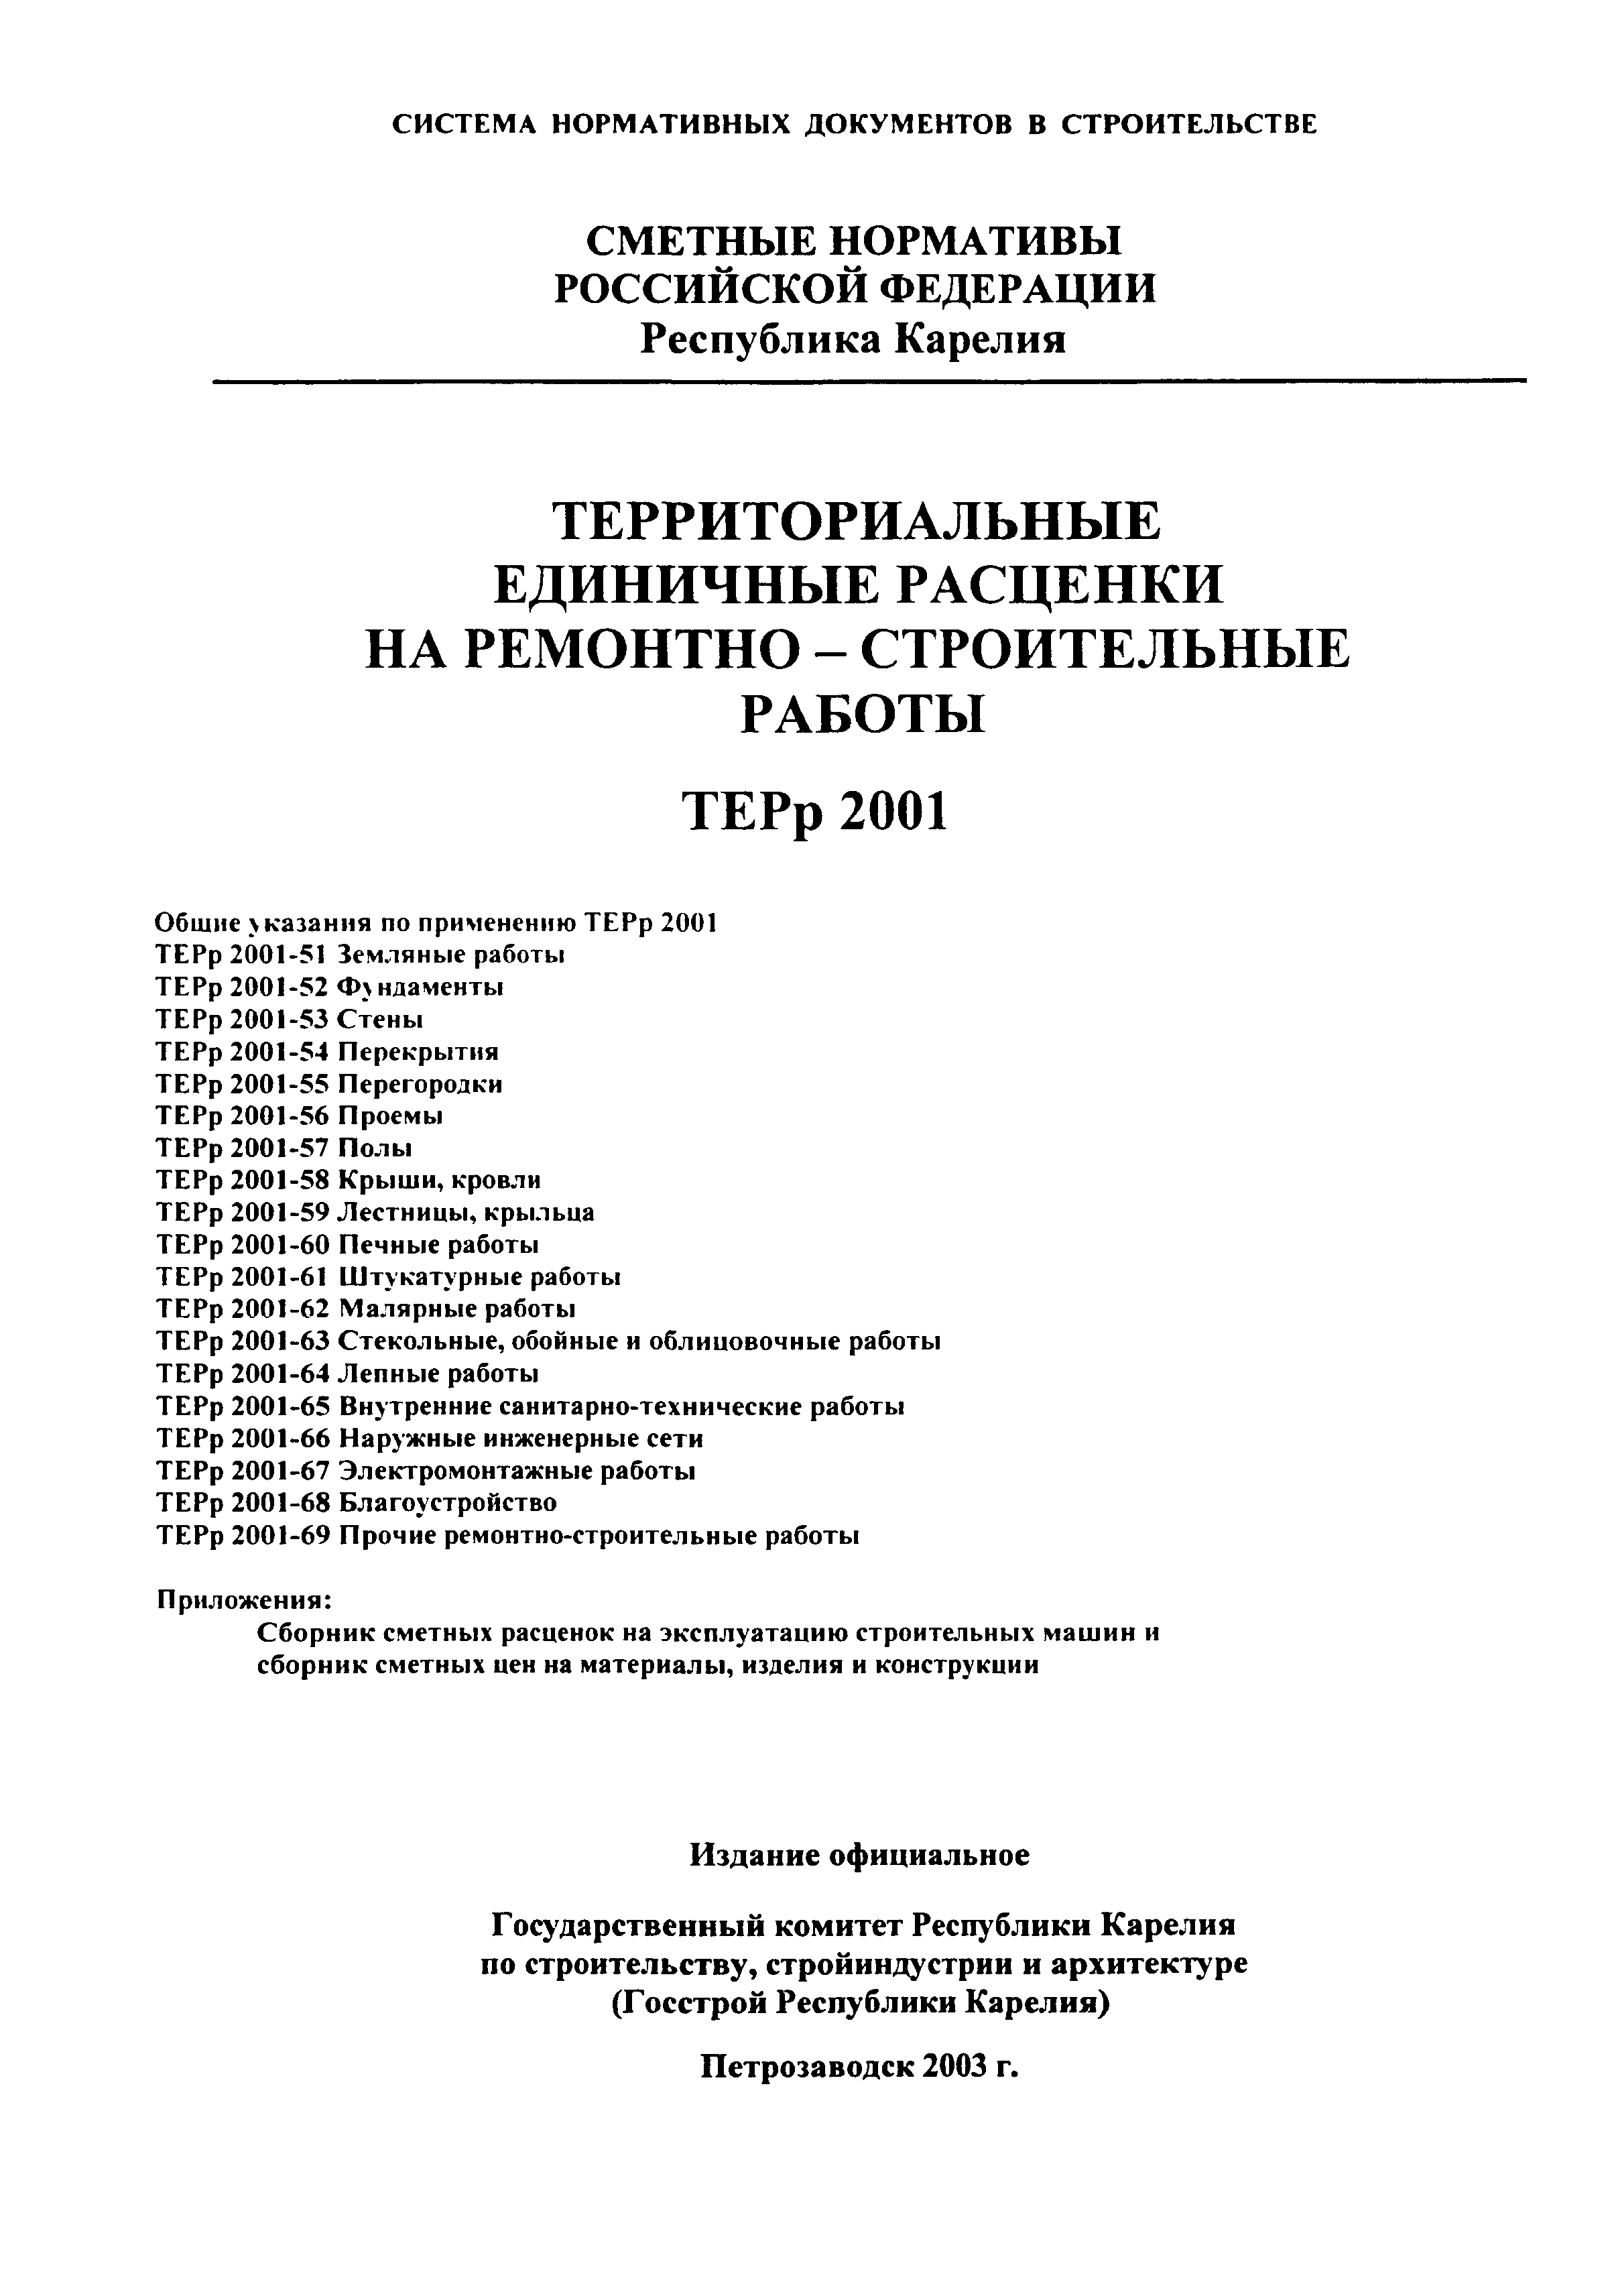 ТЕРр Республика Карелия 2001-59